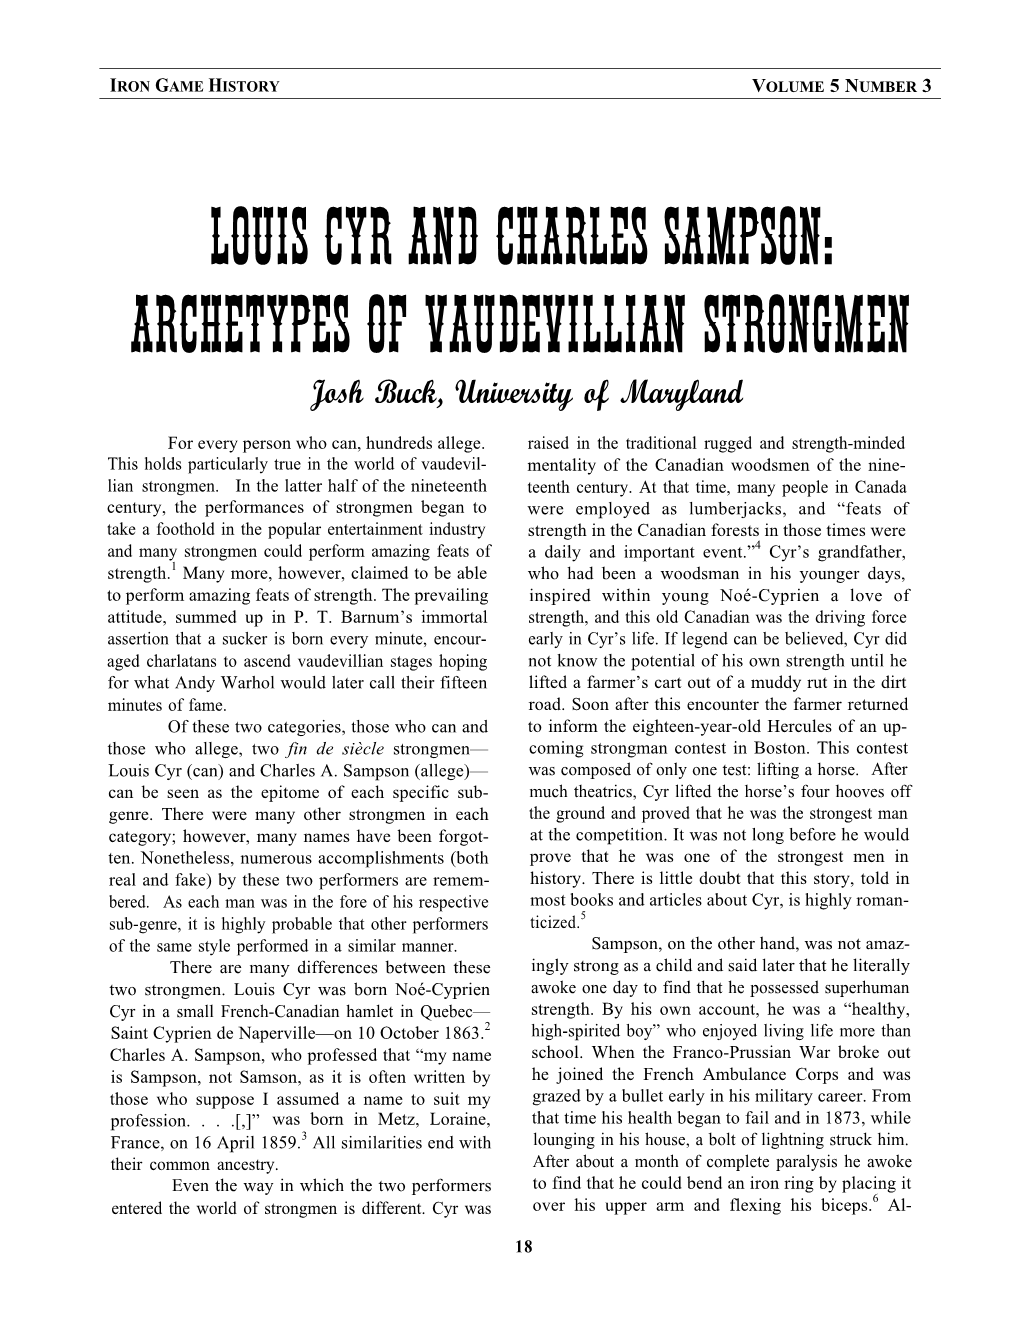 LOUIS CYR and CHARLES SAMPSON: ARCHETYPES of VAUDEVILLIAN STRONGMEN Josh Buck, University of Maryland